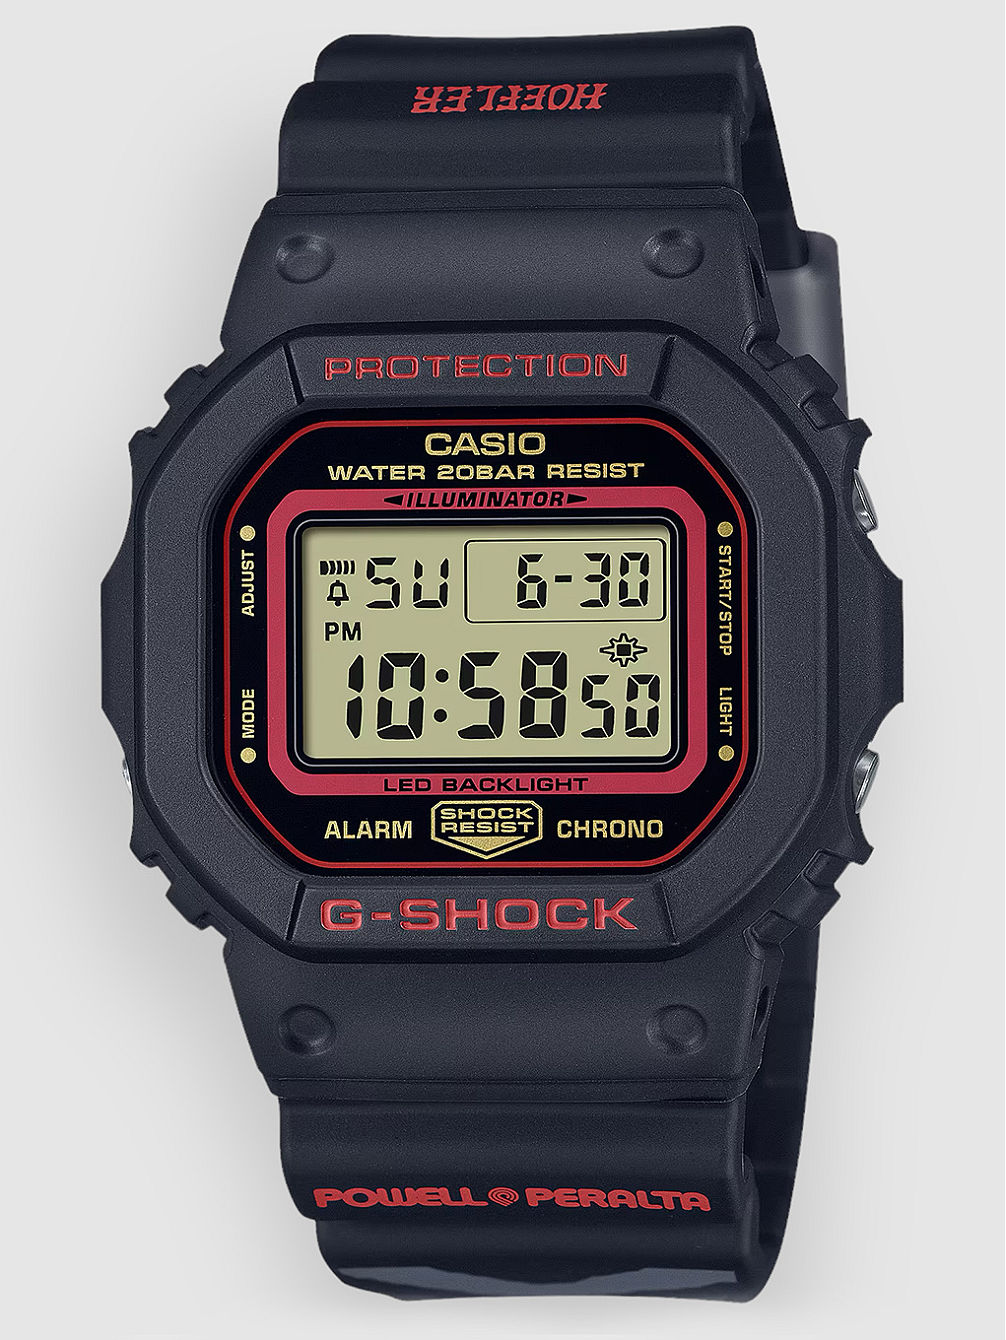 DW-5600KH-1 Watch